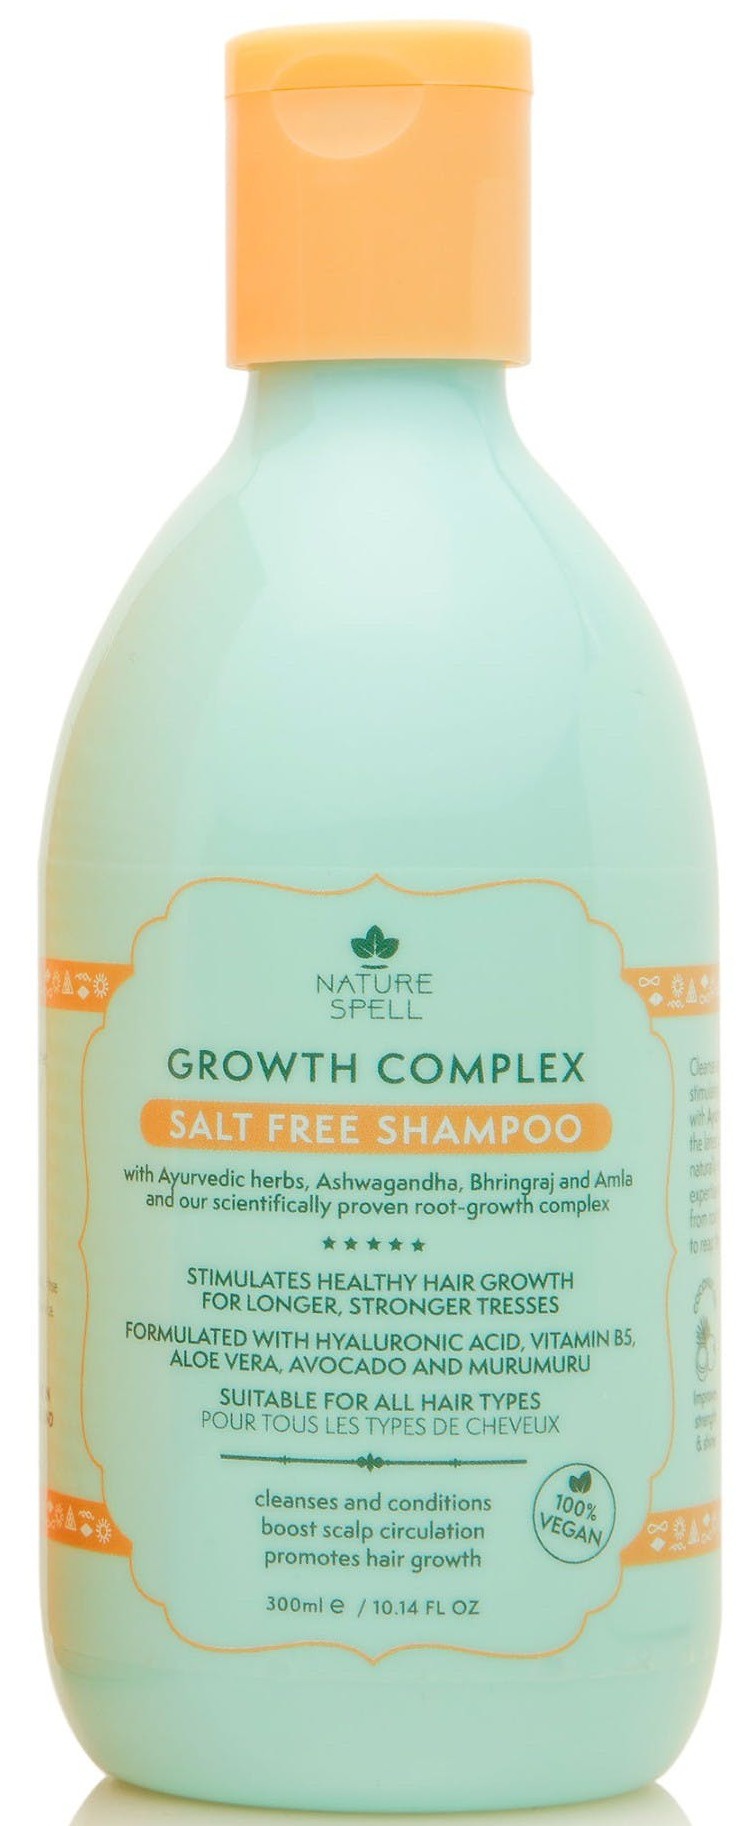 NATURE SPELL Growth Complex Salt Free Shampoo